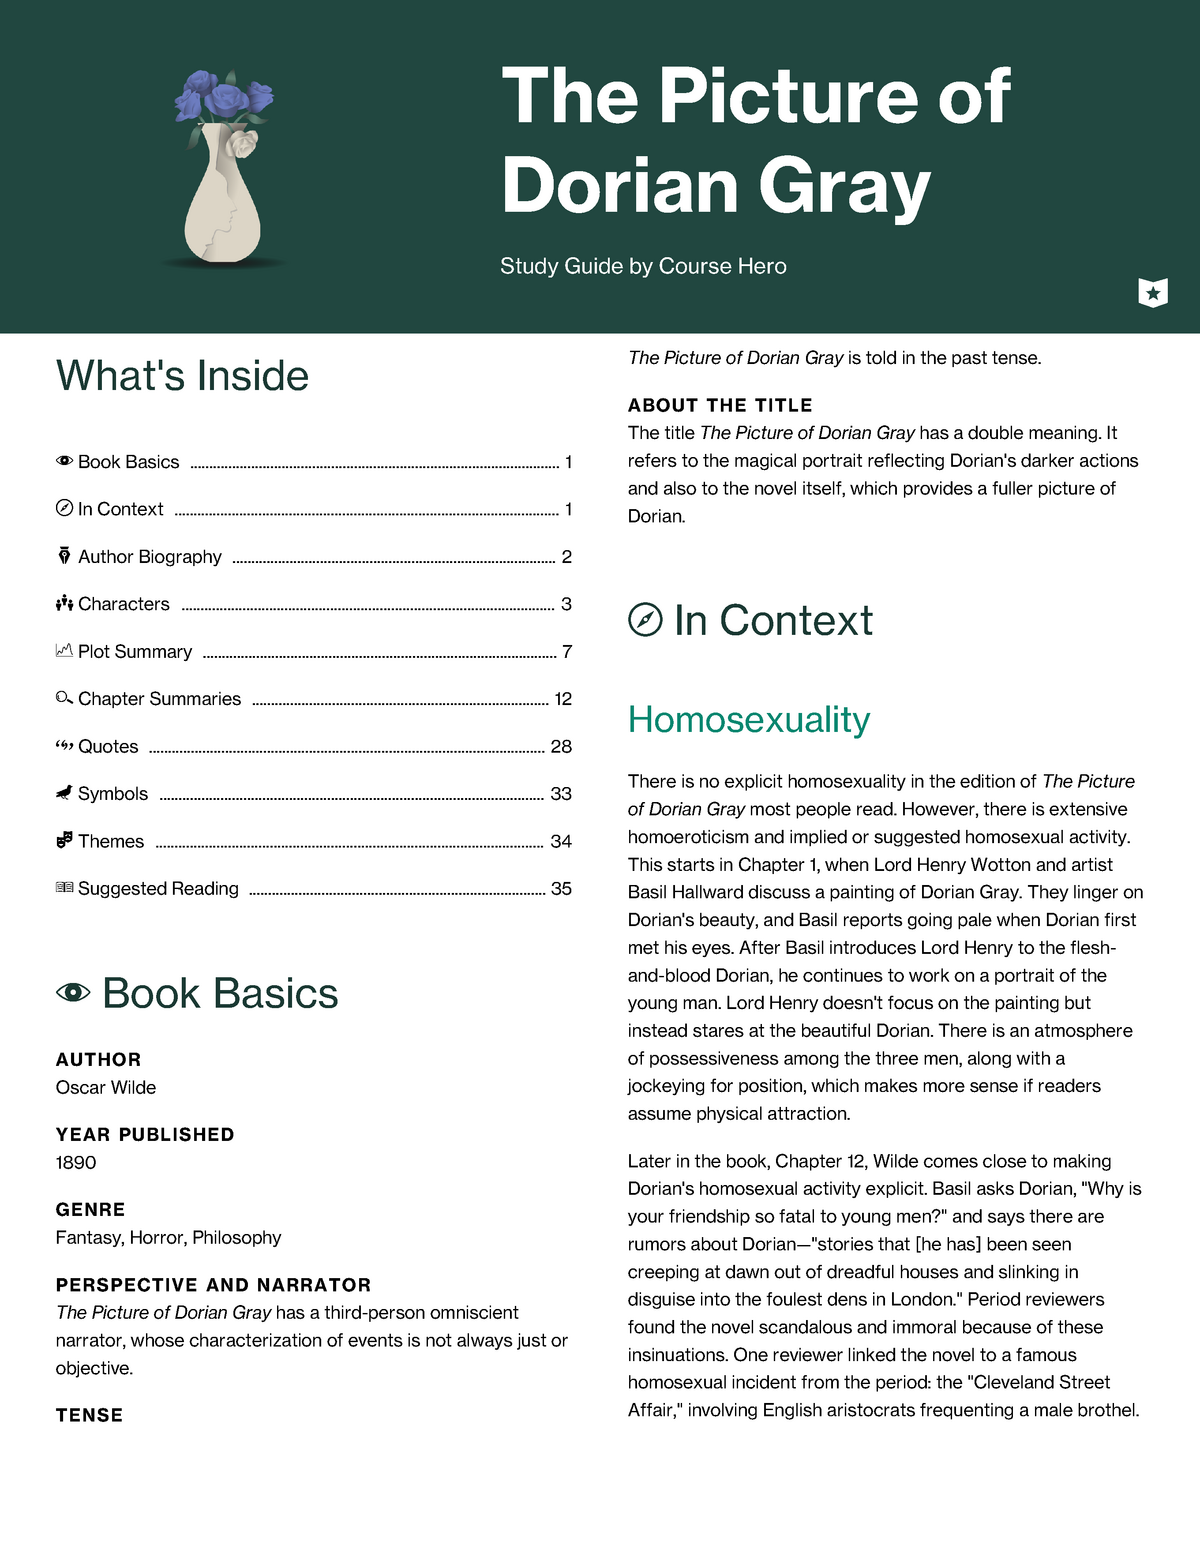 dorian gray essay pdf